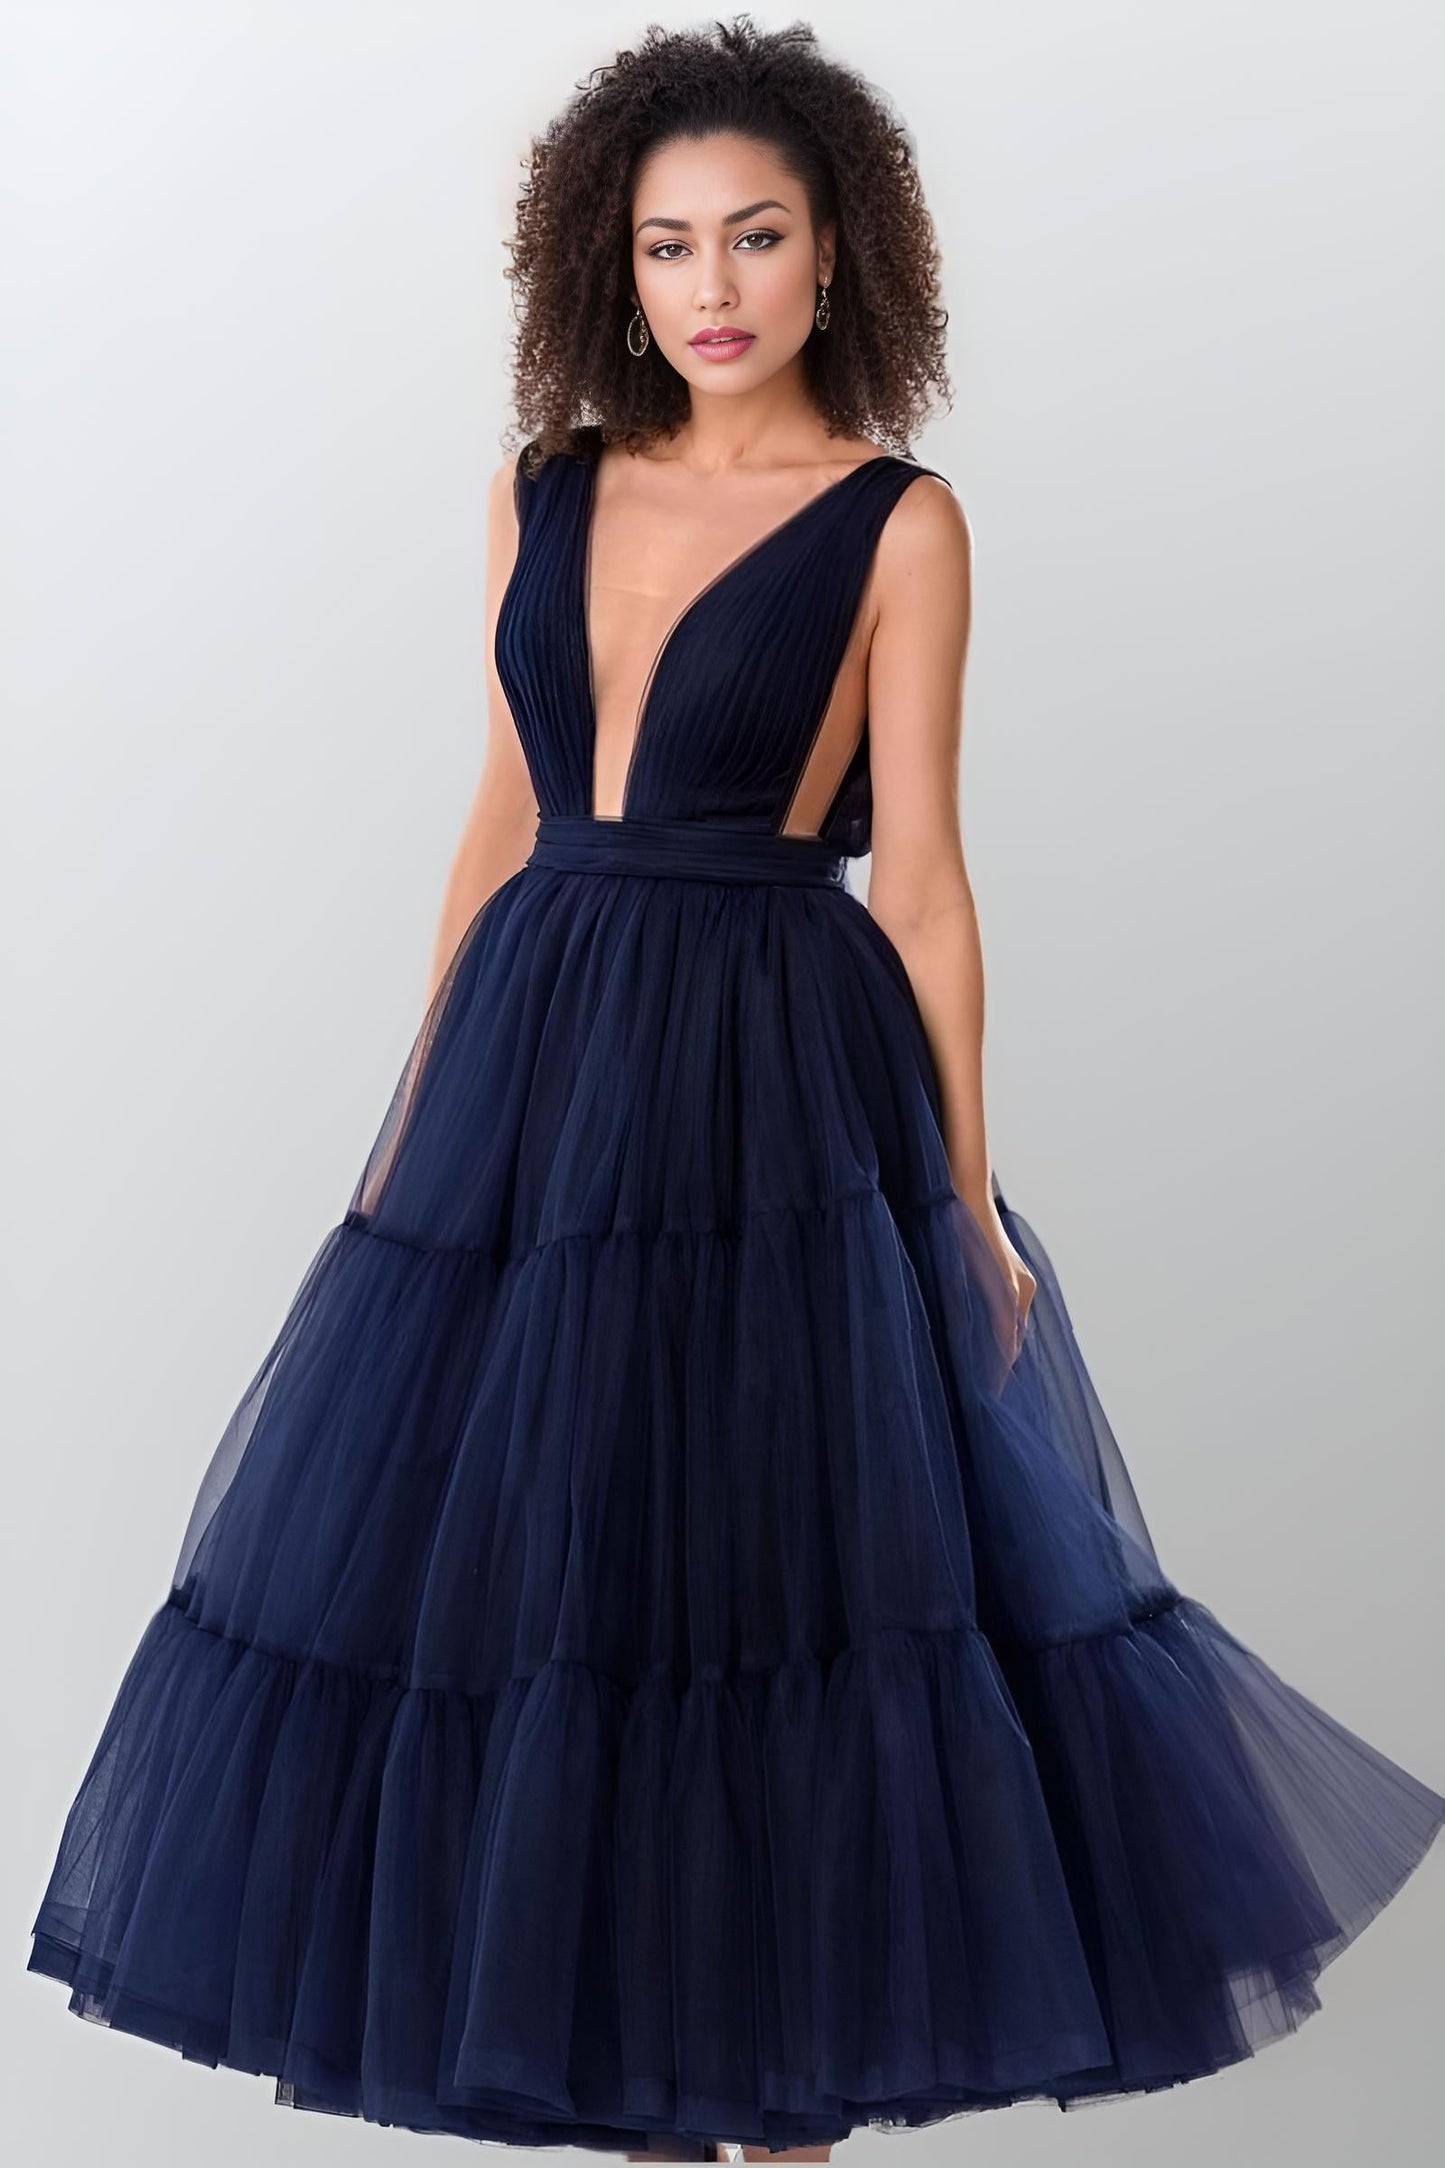 ZARA Formal Couture Dress